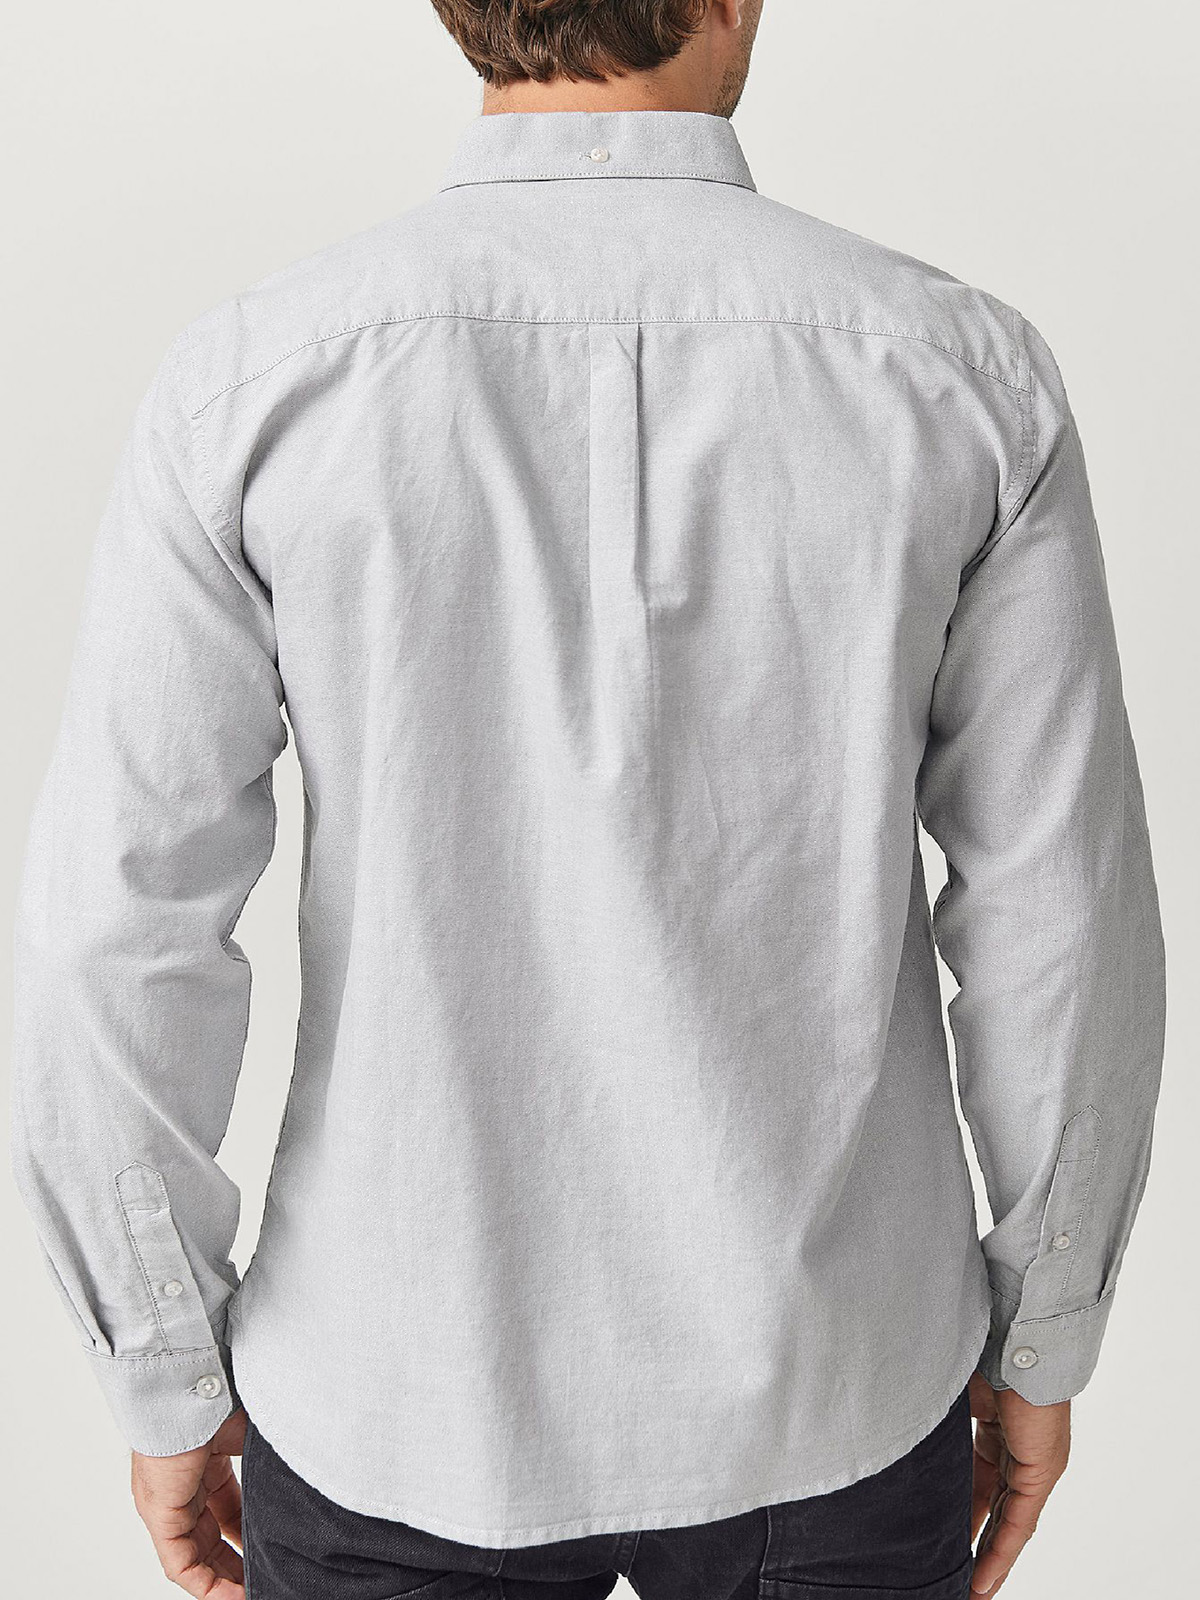 Ellos - - Ellos GREY Mens Pure Cotton Button Collar Oxford Shirt - Plus ...